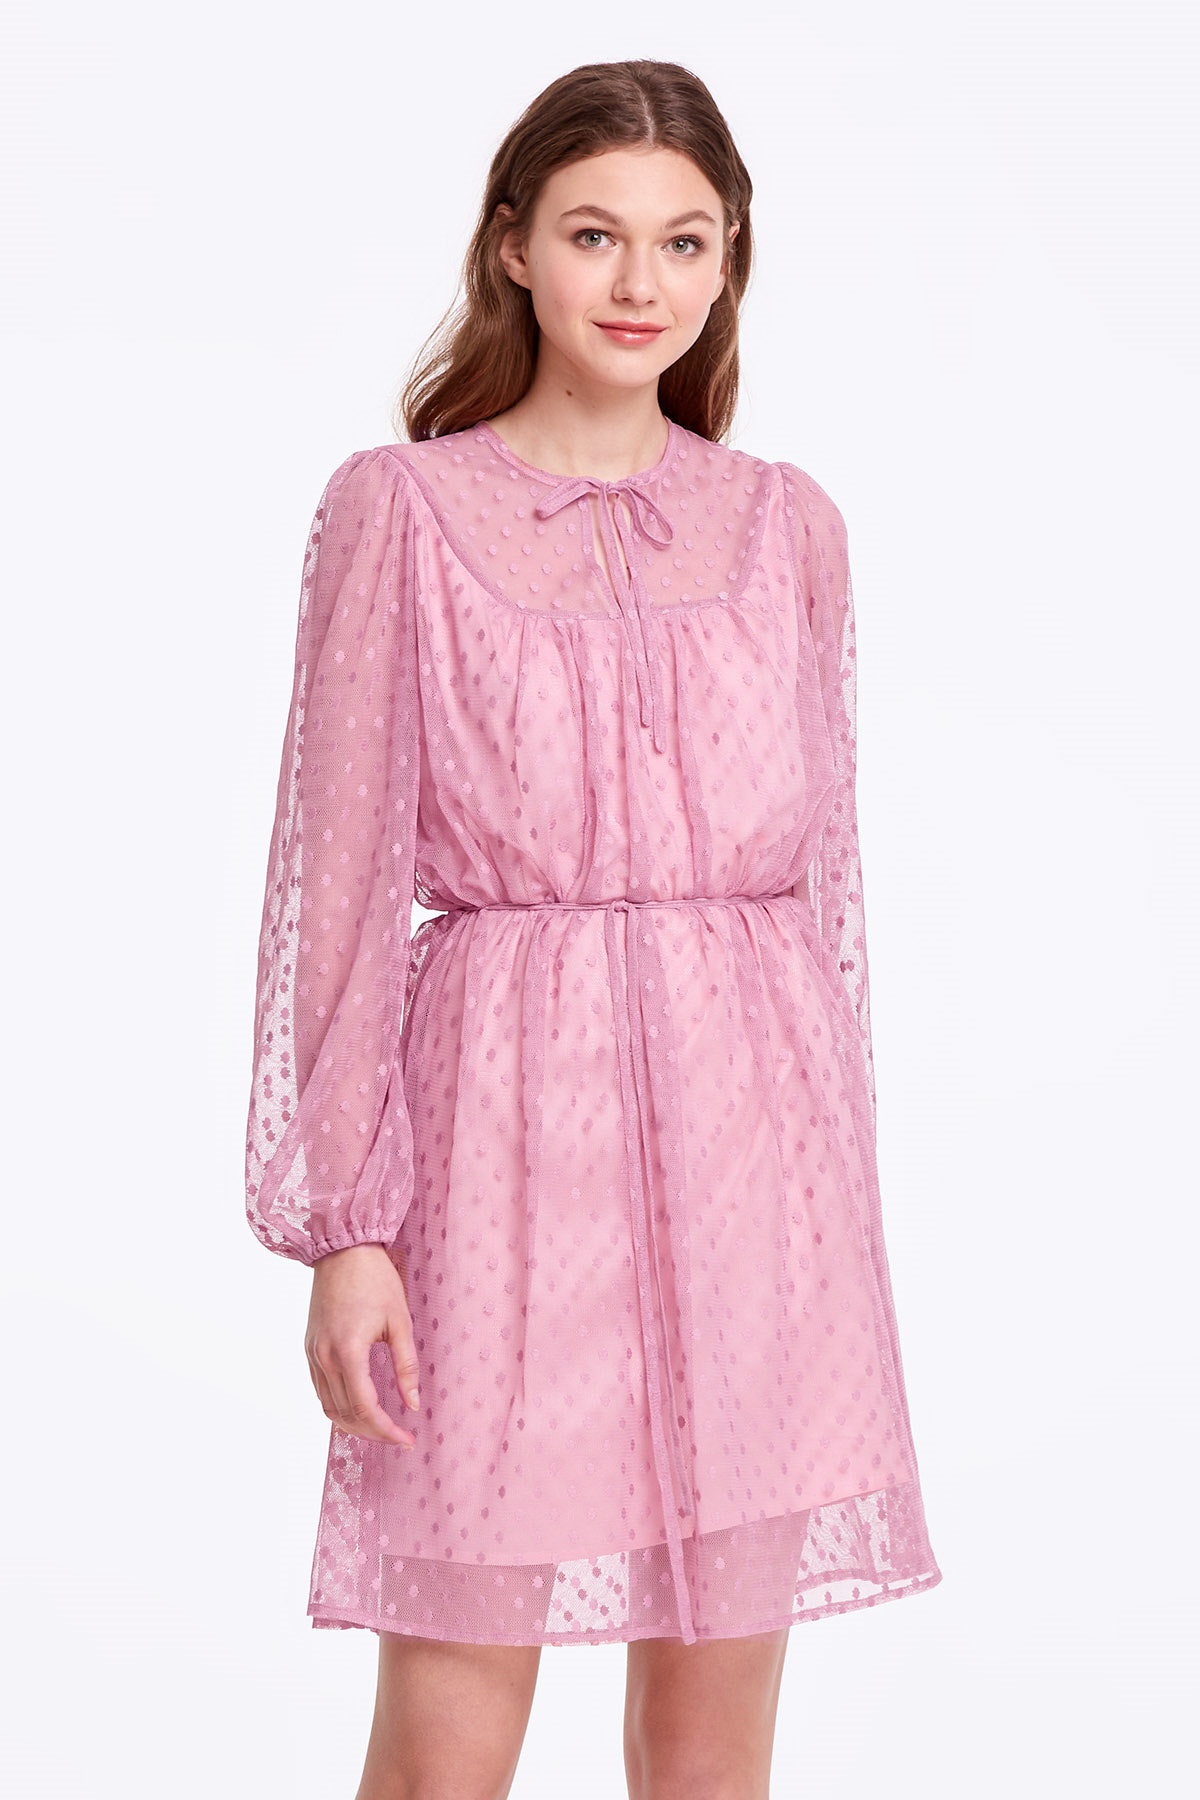 Pink dress with a polka dot print and ties, photo 1